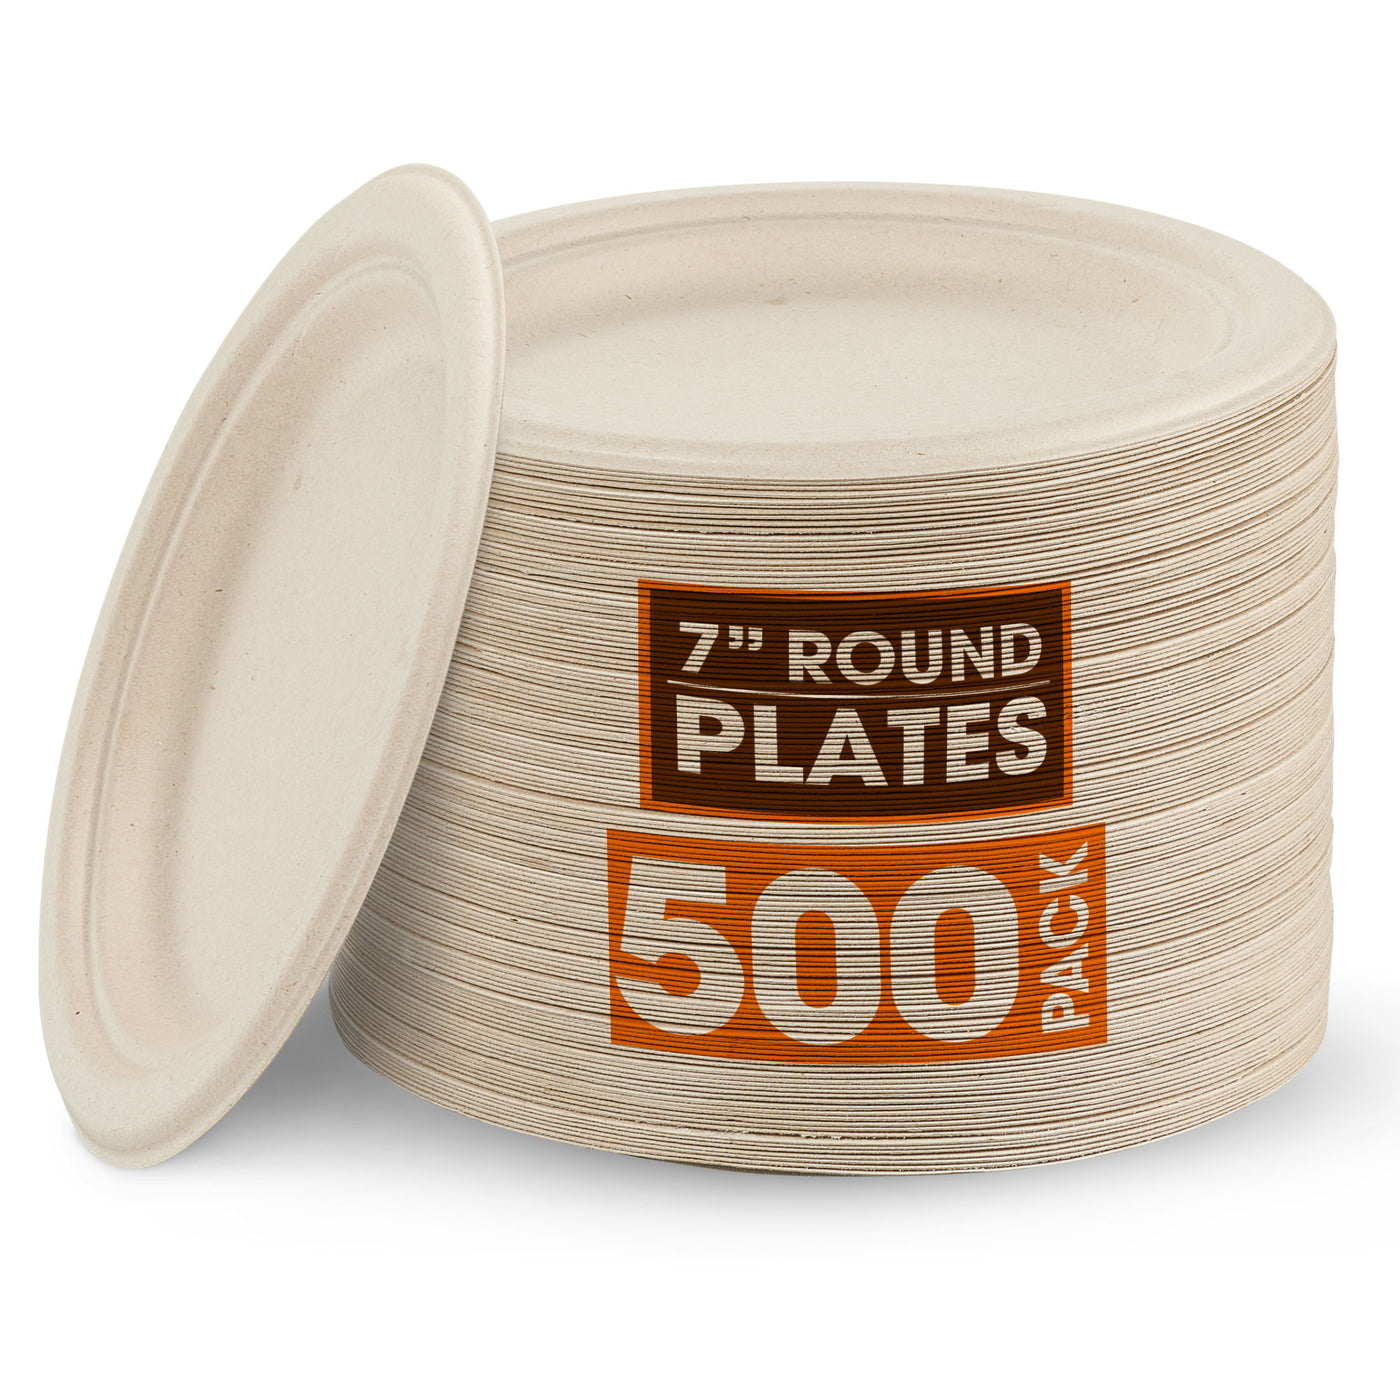 200 Pack Disposable Paper Plates,Eco-Friendly Biodegradable Plates,100% Compostable Heavy-Duty Paper Plates,Disposable Sugarcane Plates